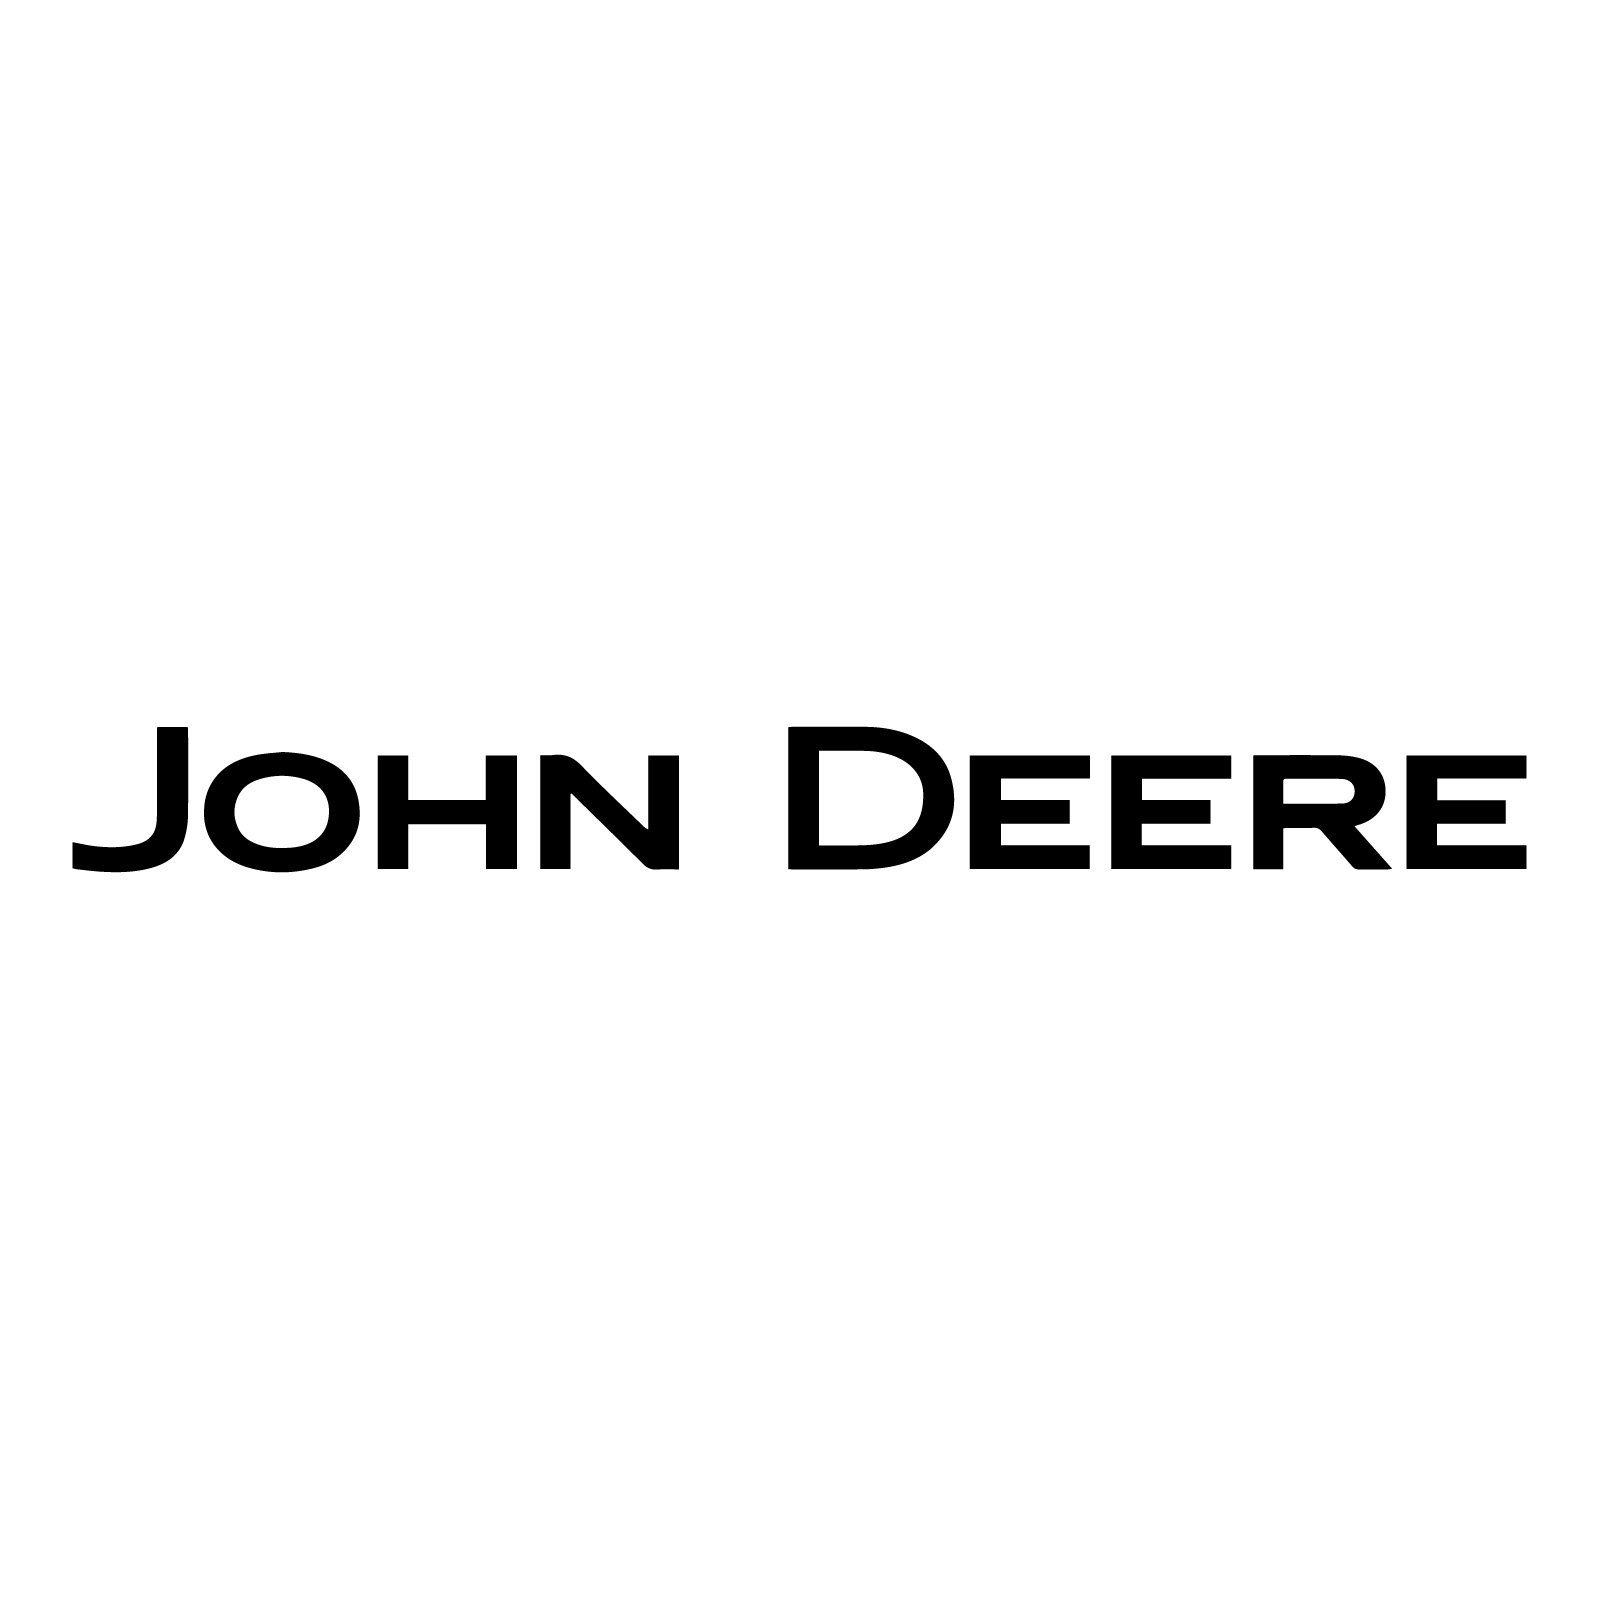 john deere logo4